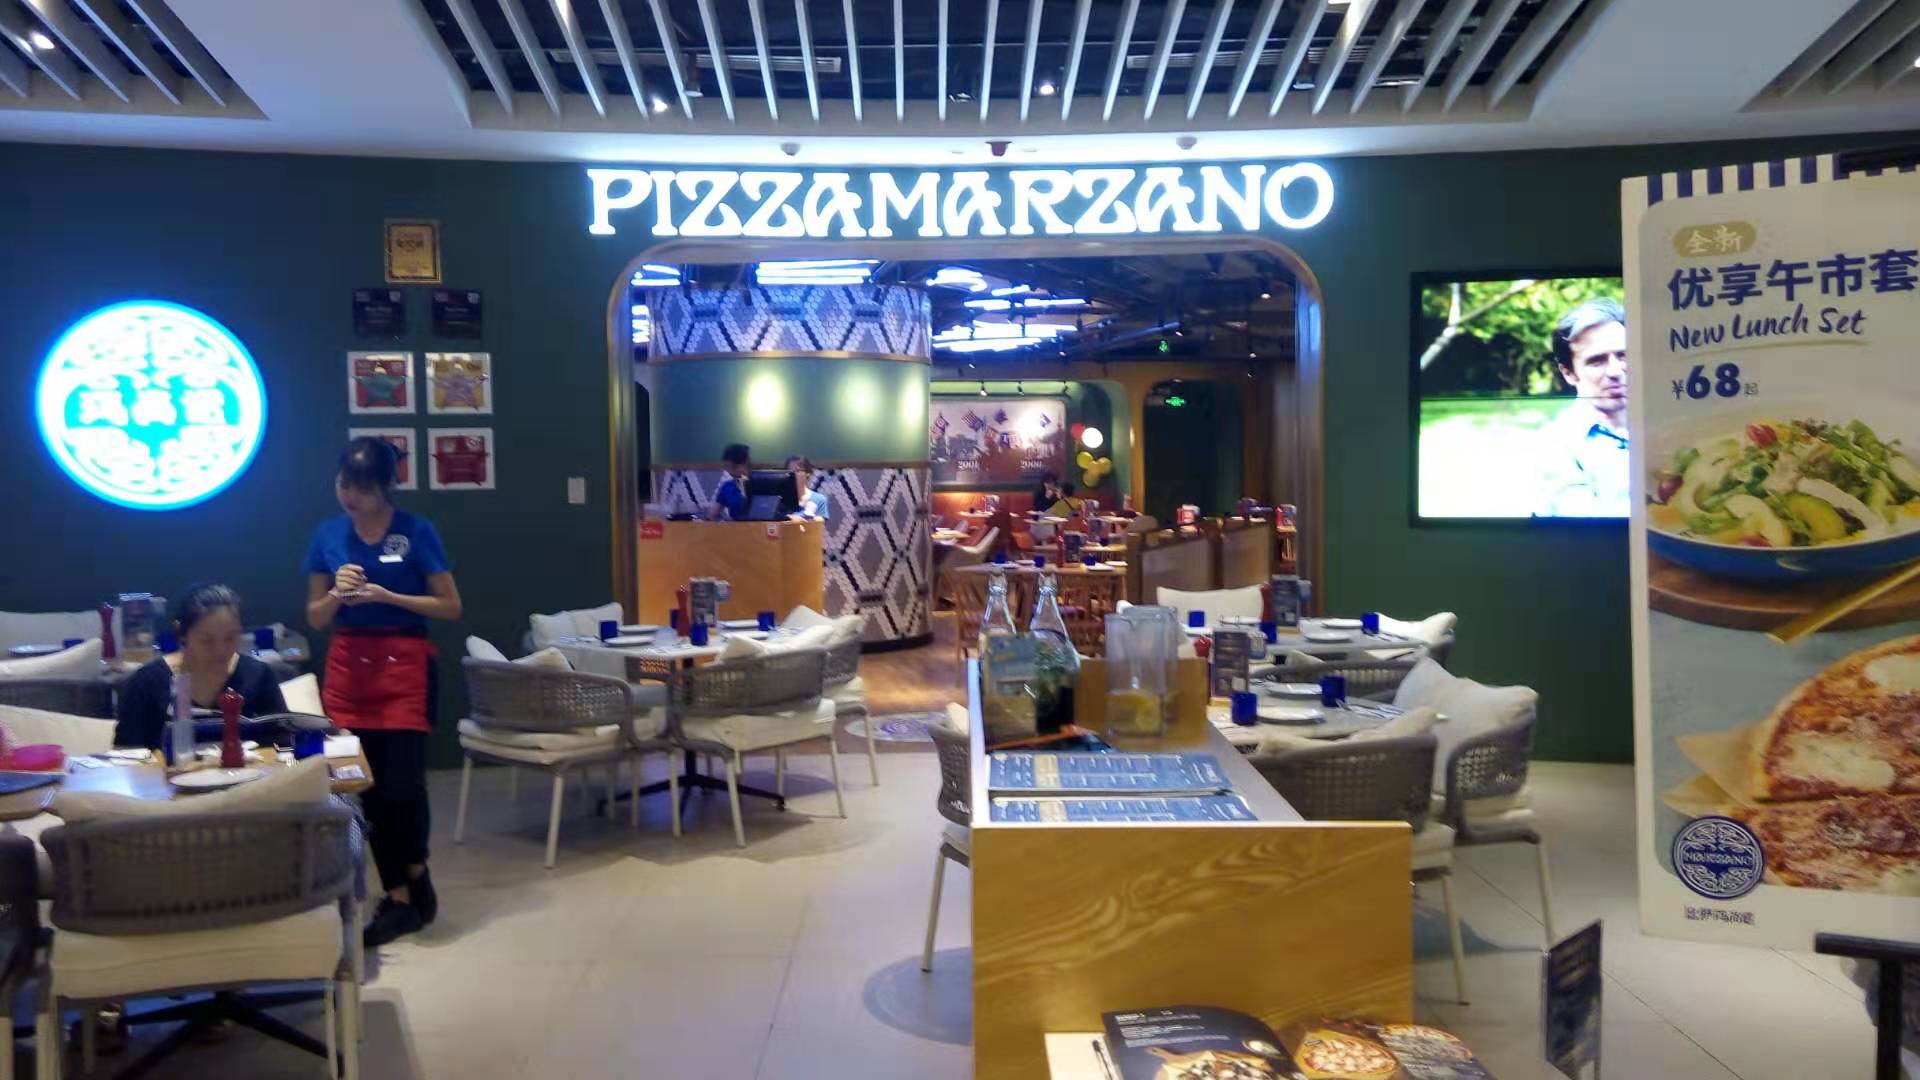 marzano玛尚诺披萨图片